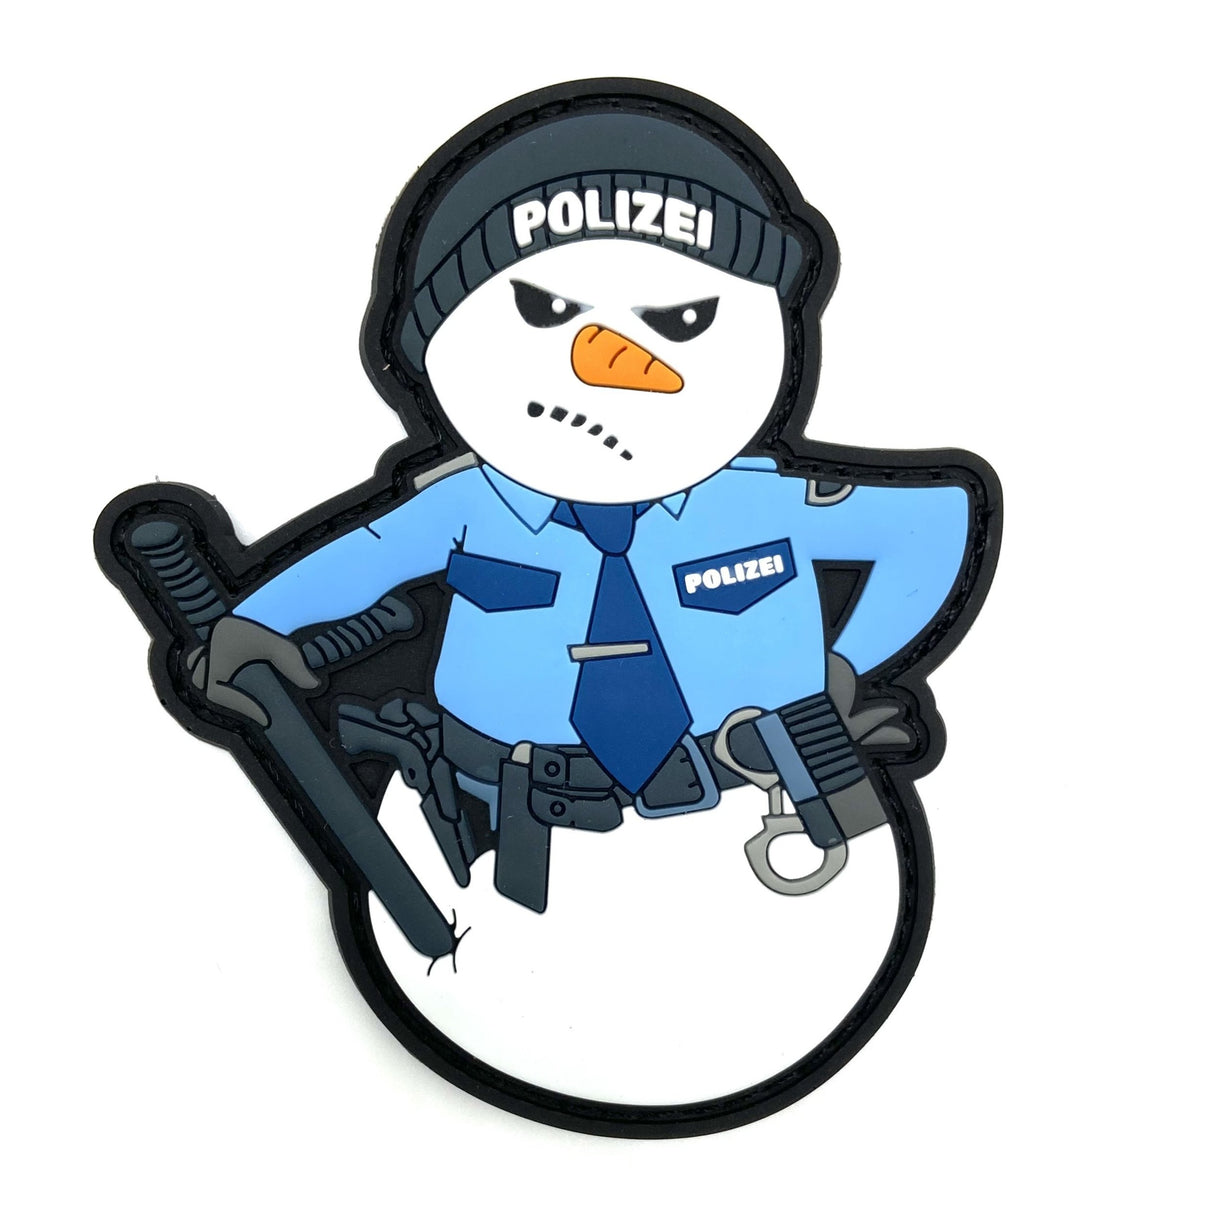 Grumpy Police Snowman Rubber Patch